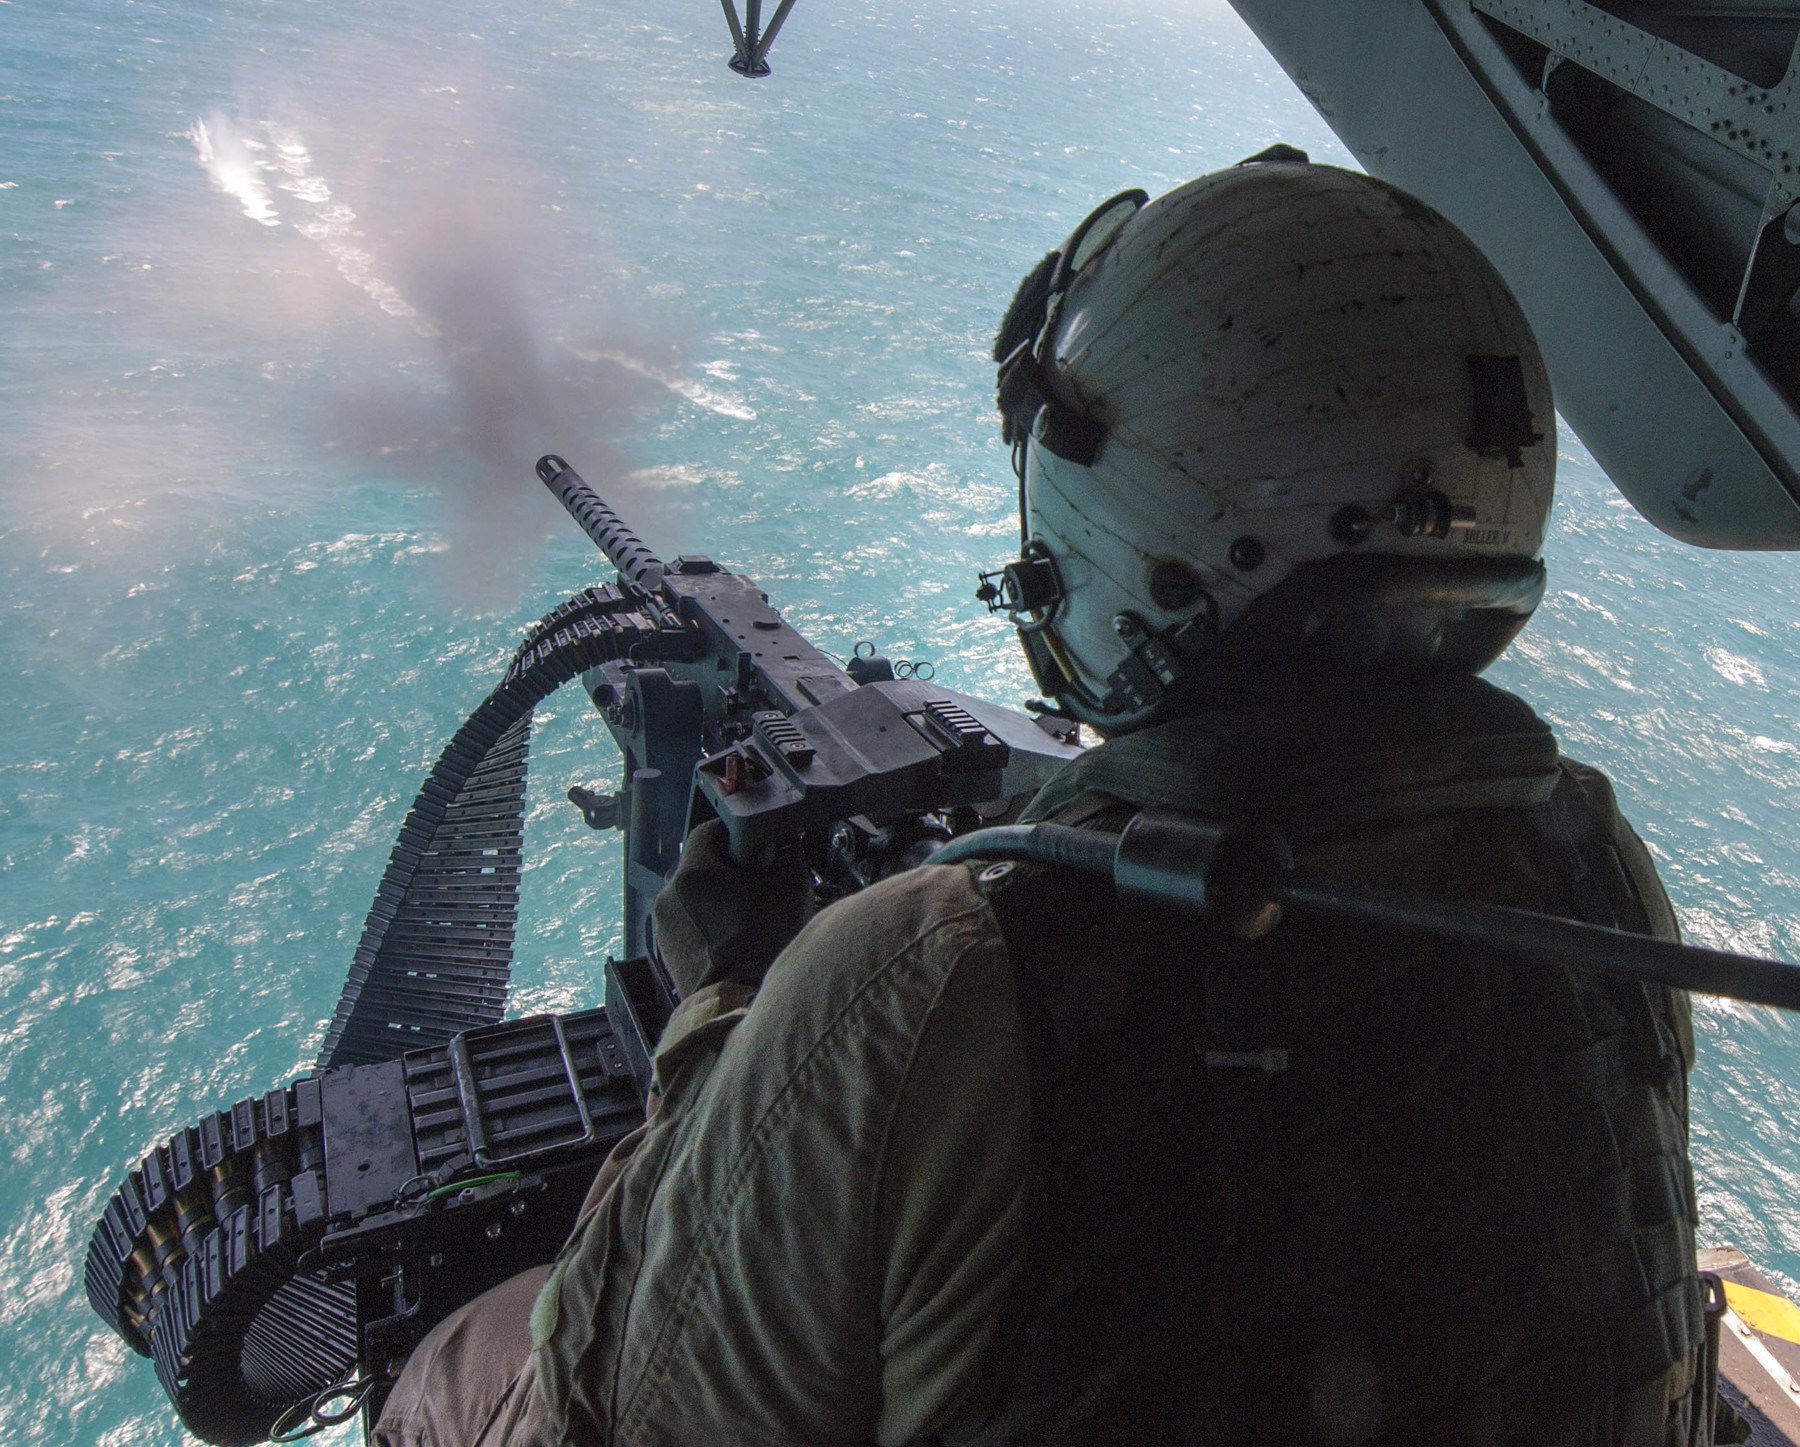 hm-15 blackhawks helicopter mine countermeasures squadron navy mh-53e sea dragon 23 gau-21 caliber .50 machine gun